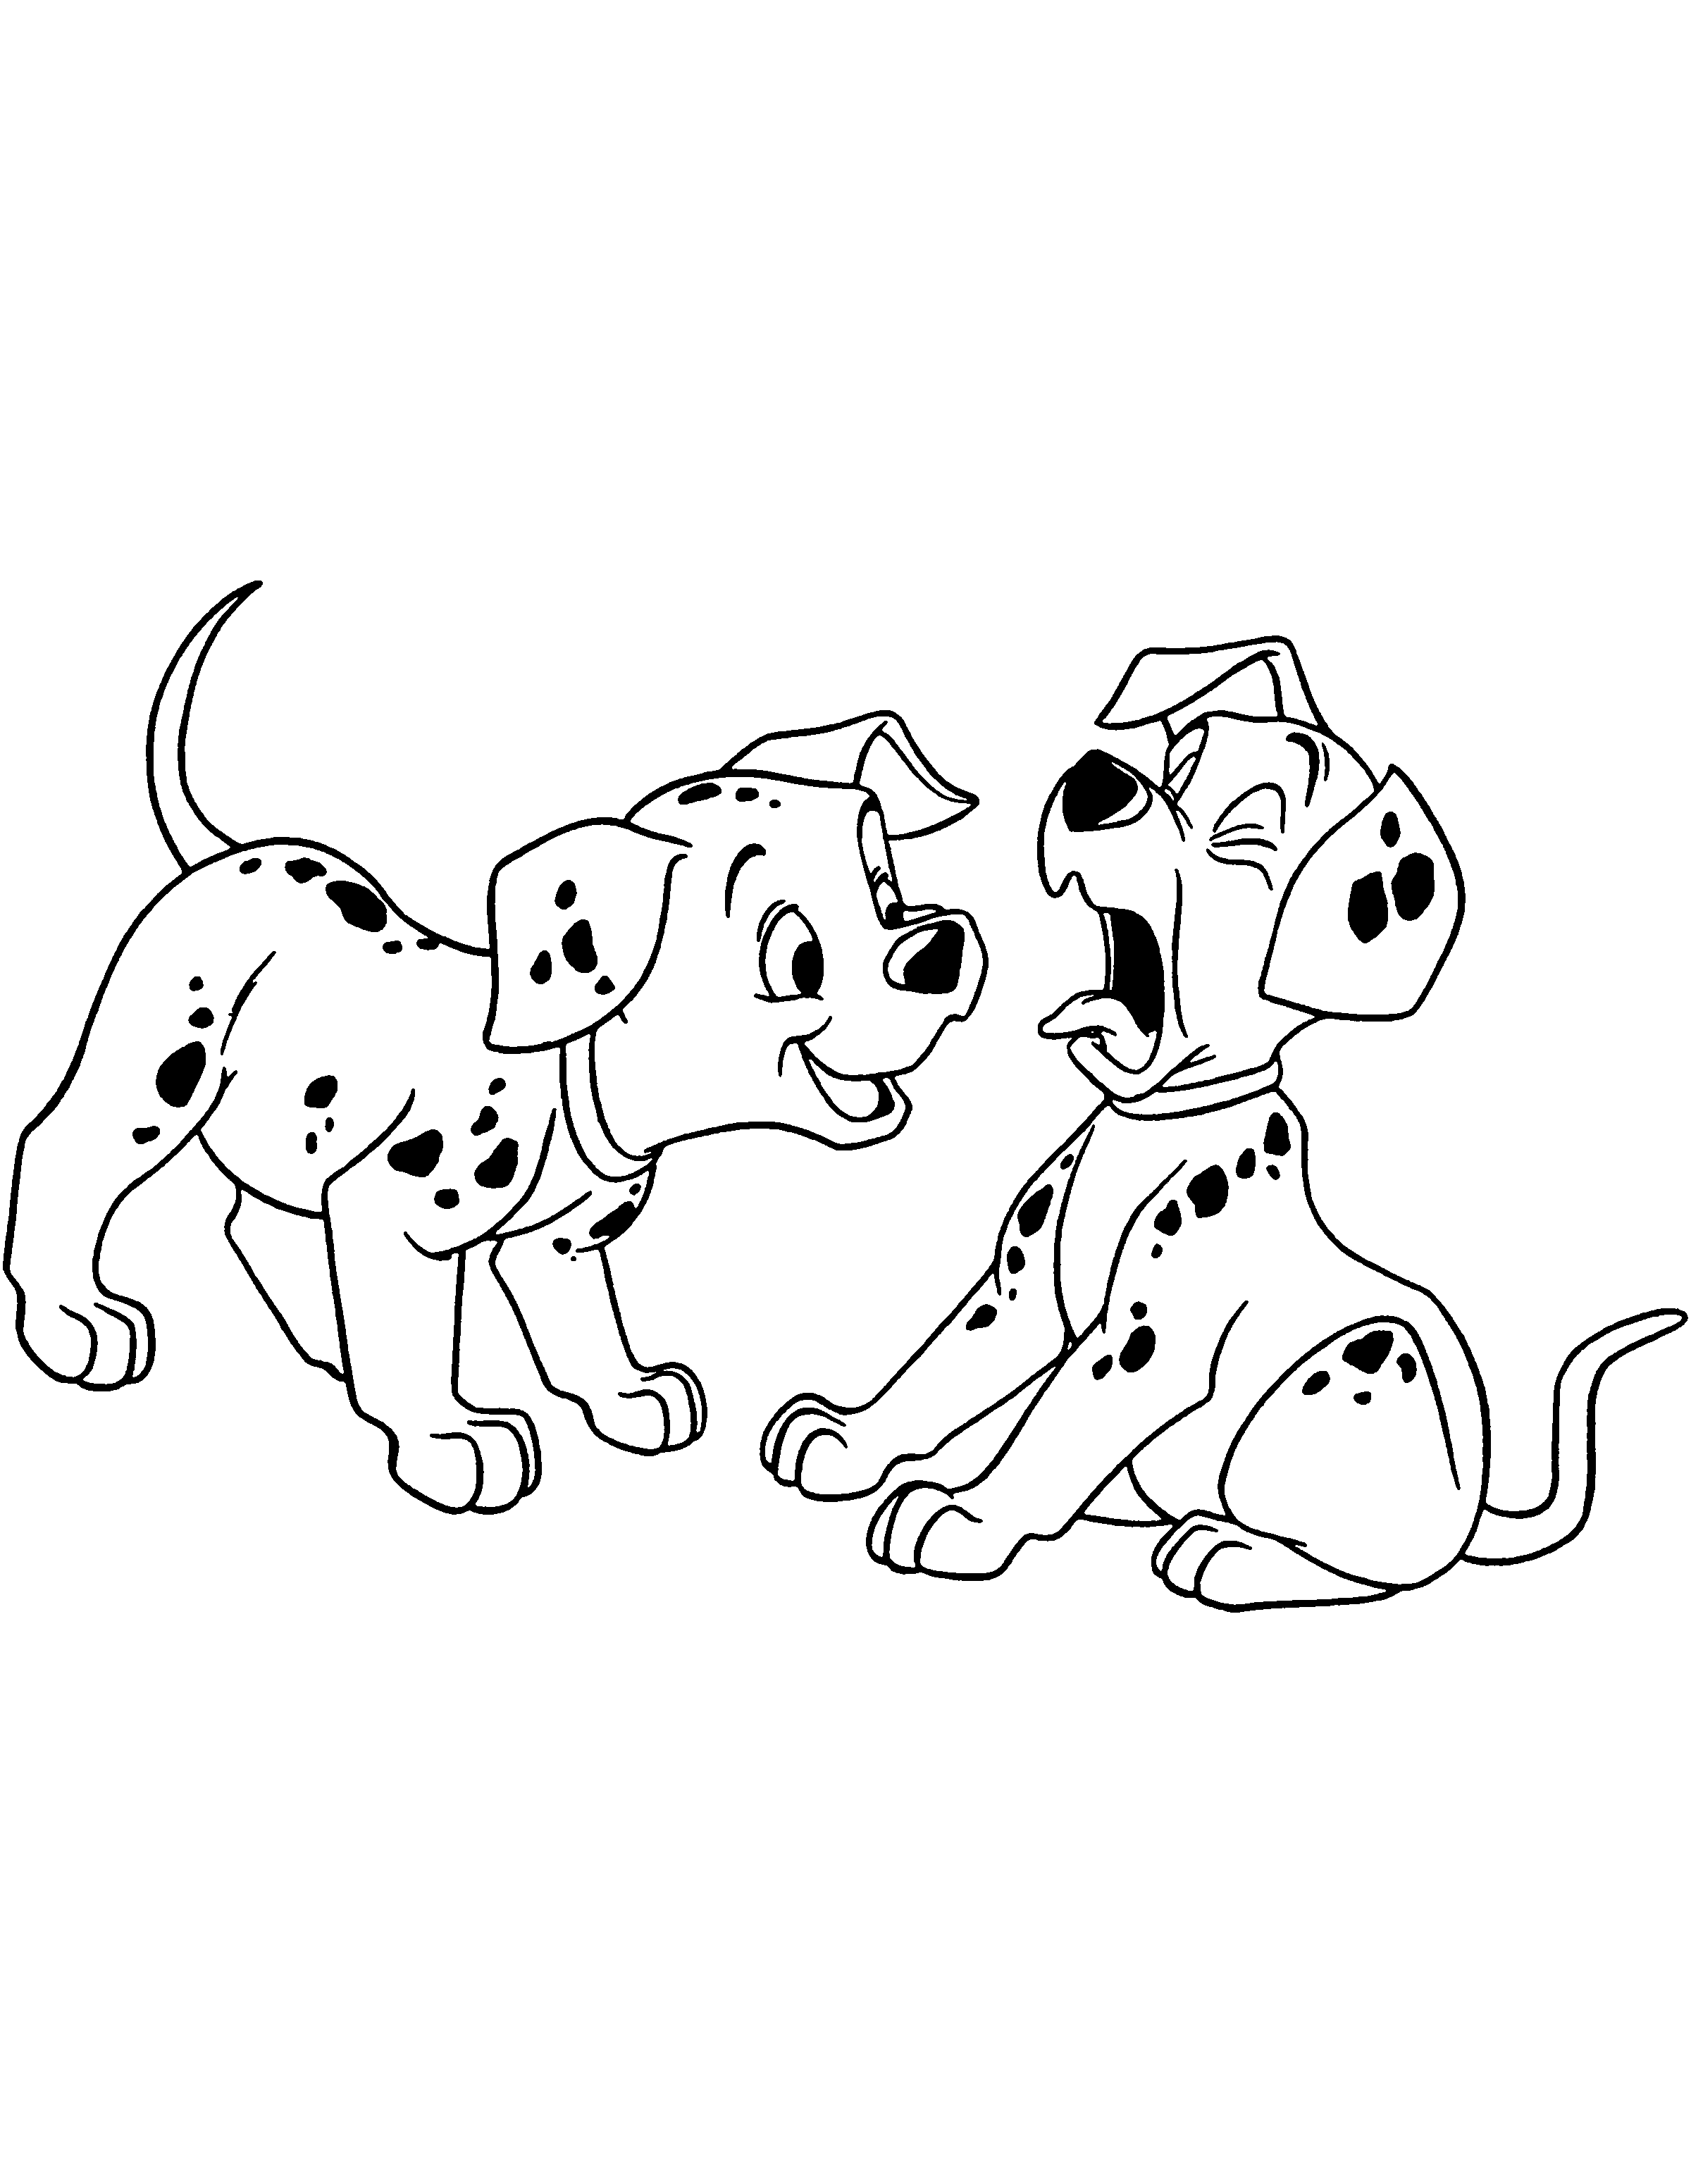 Free Dalmatian Dog Coloring Page, Download Free Dalmatian Dog Coloring